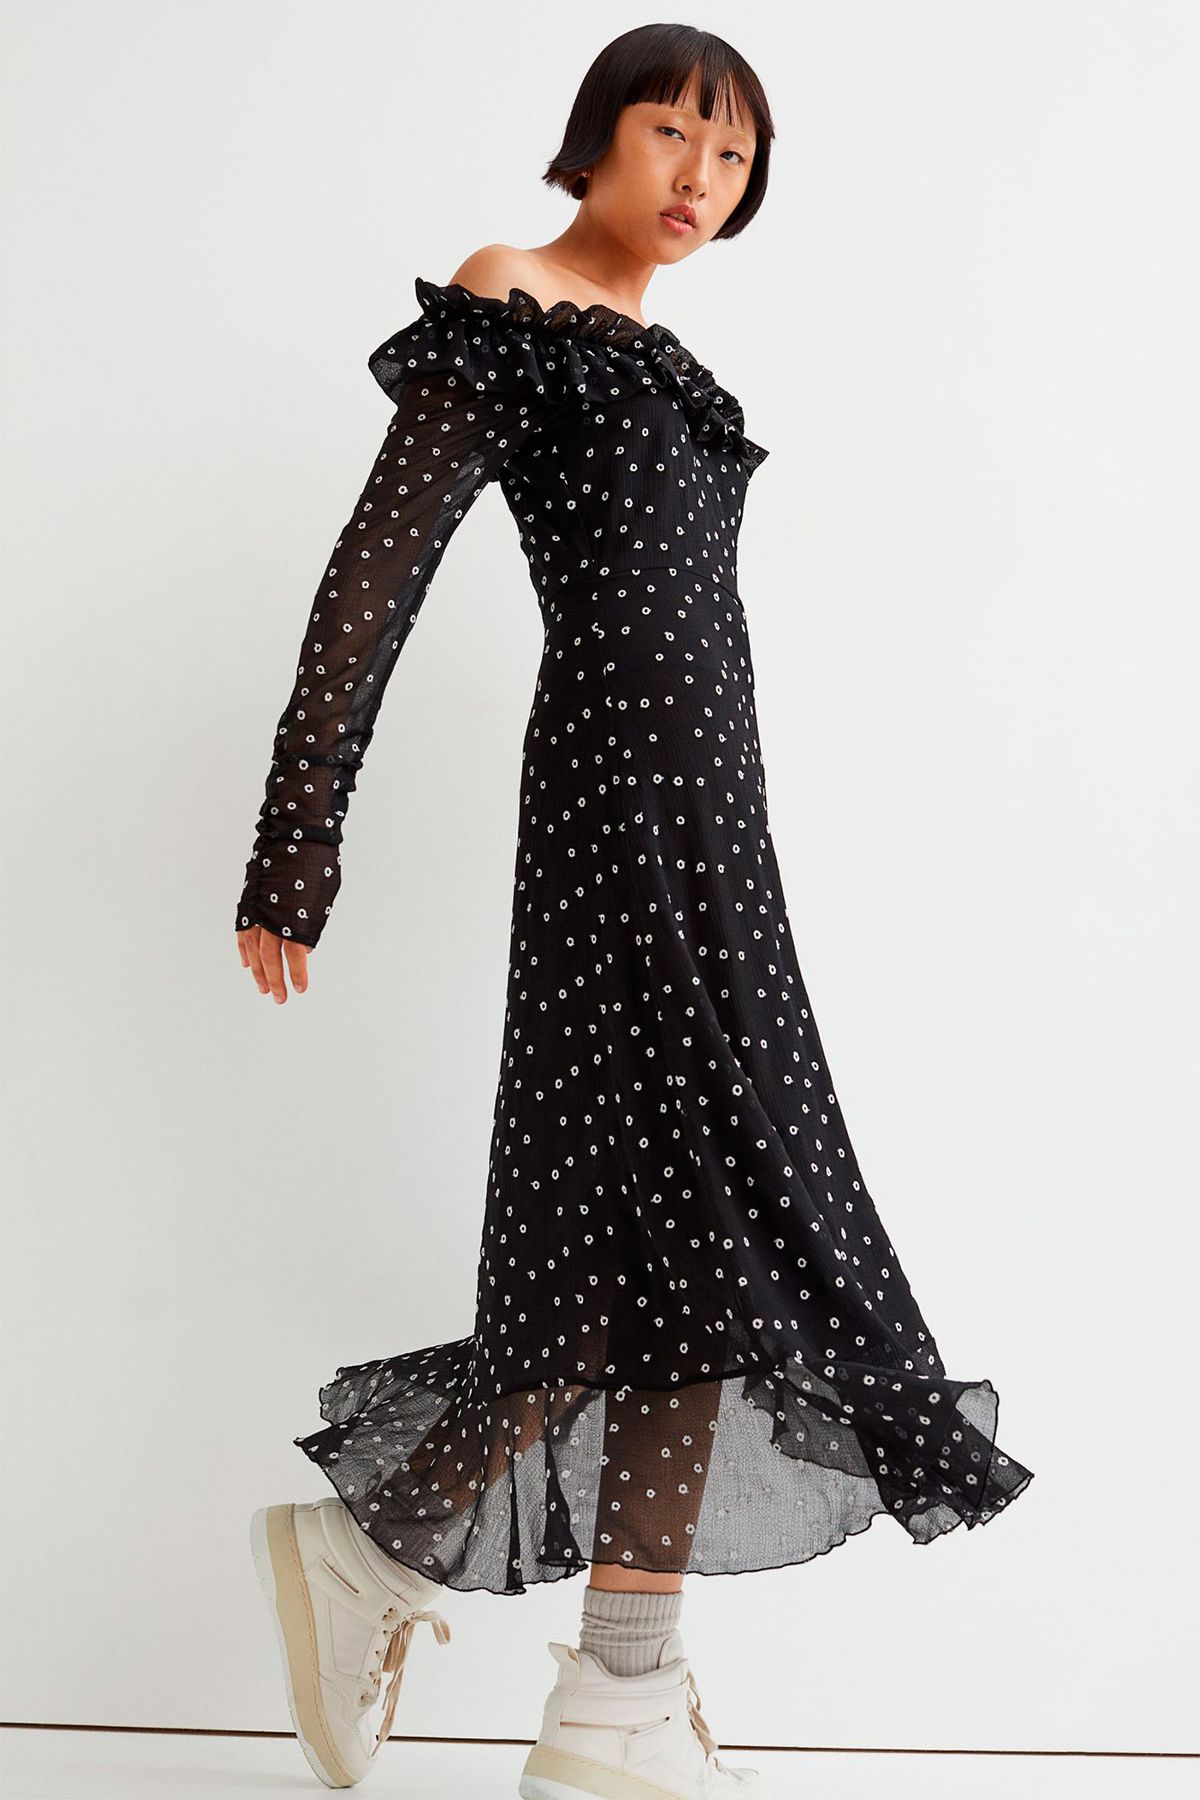 Este vestido lunares de manga larga de H&M es ideal